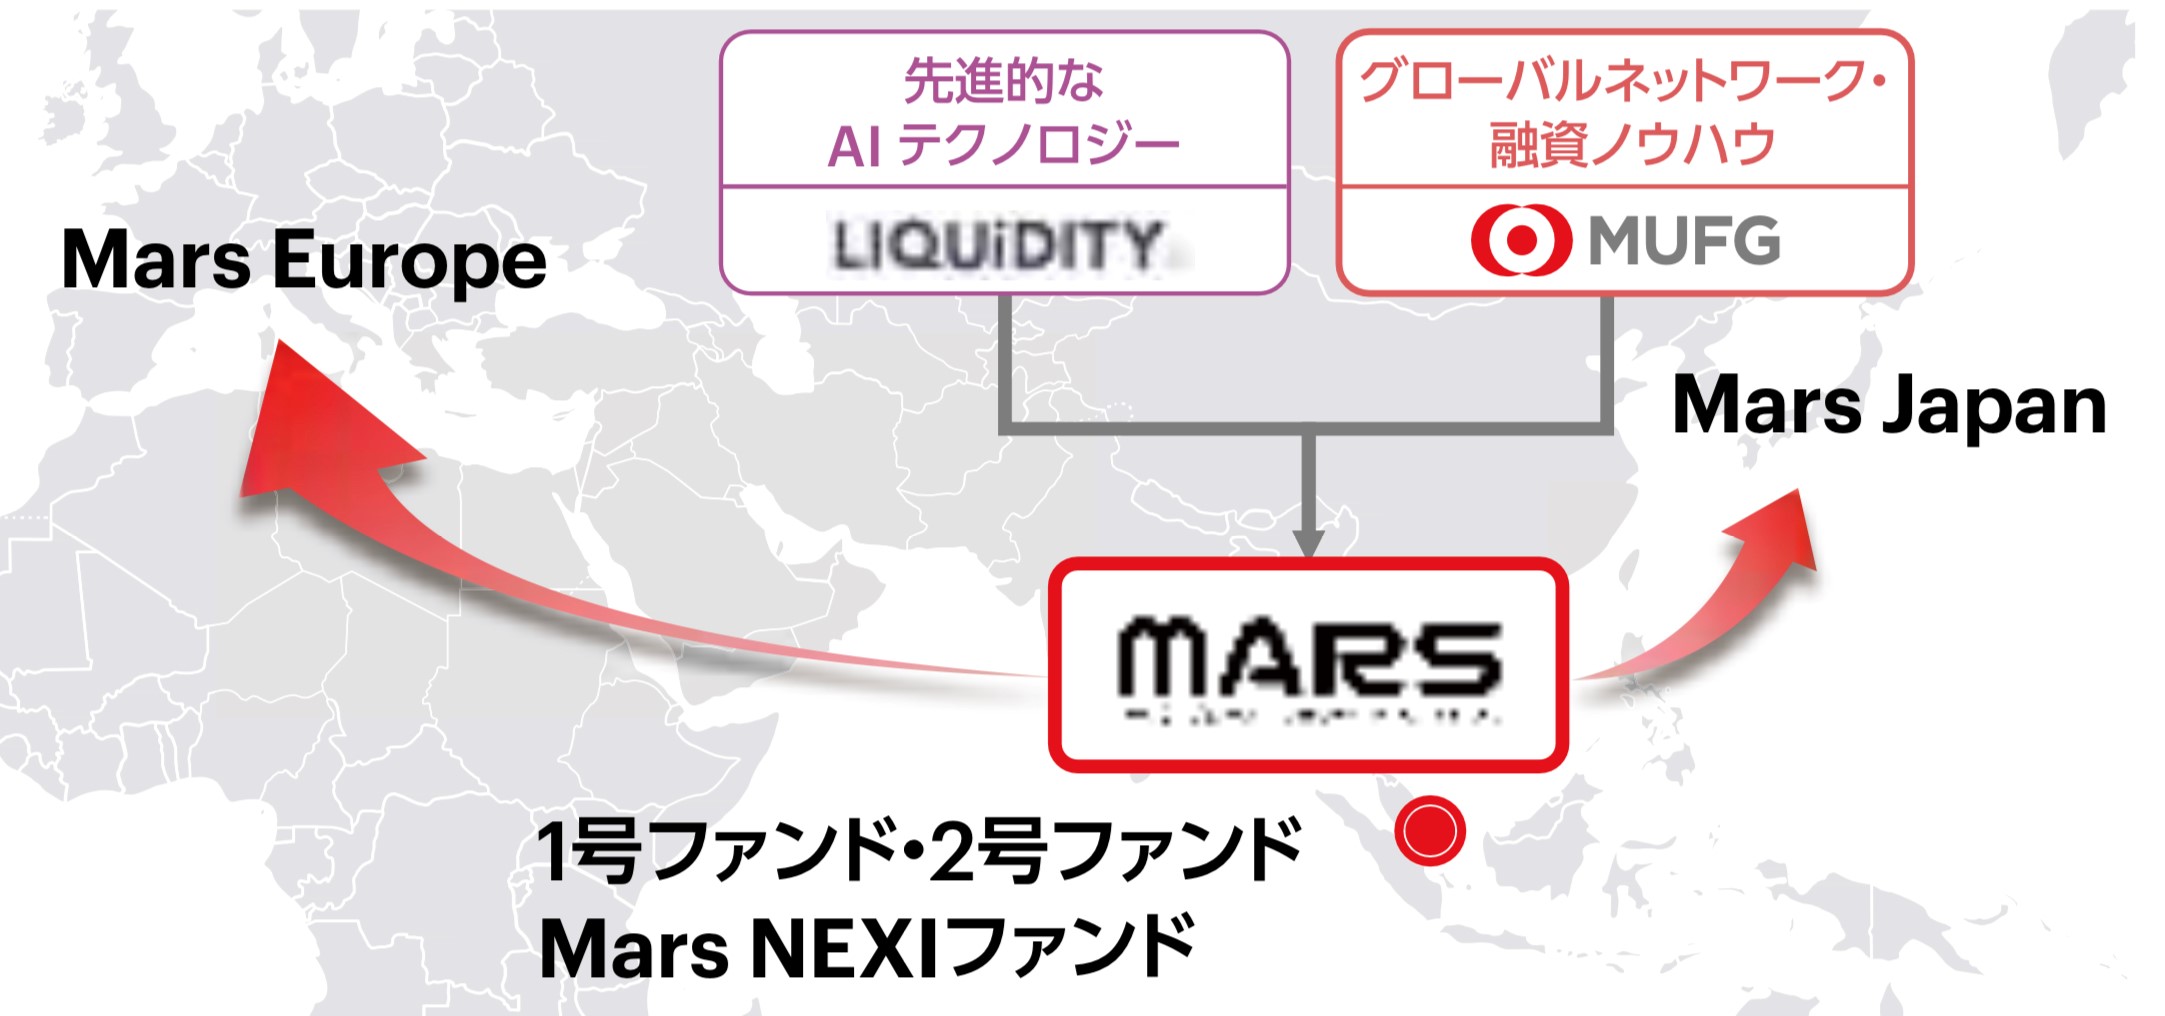 Mars Japanの立ち上げ